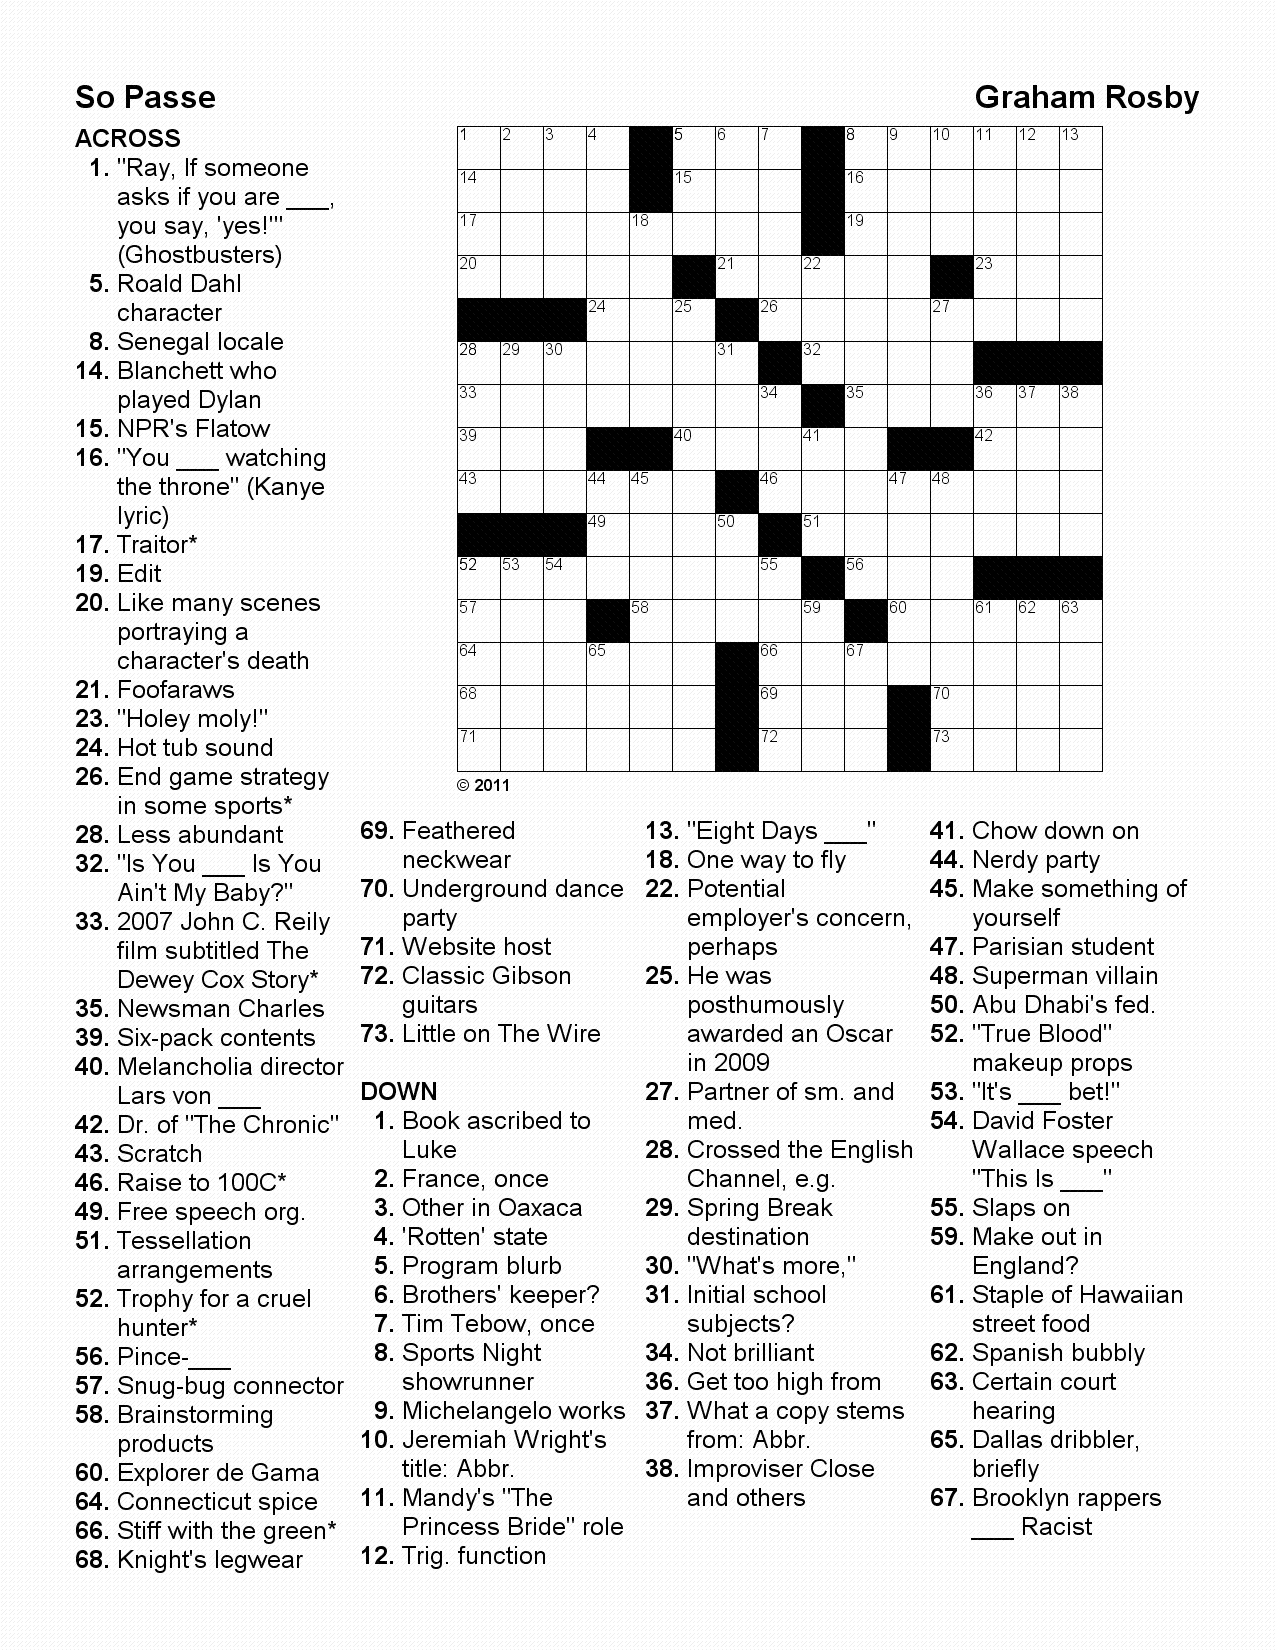 canonprintermx410-25-unique-one-across-crossword-puzzle-solver